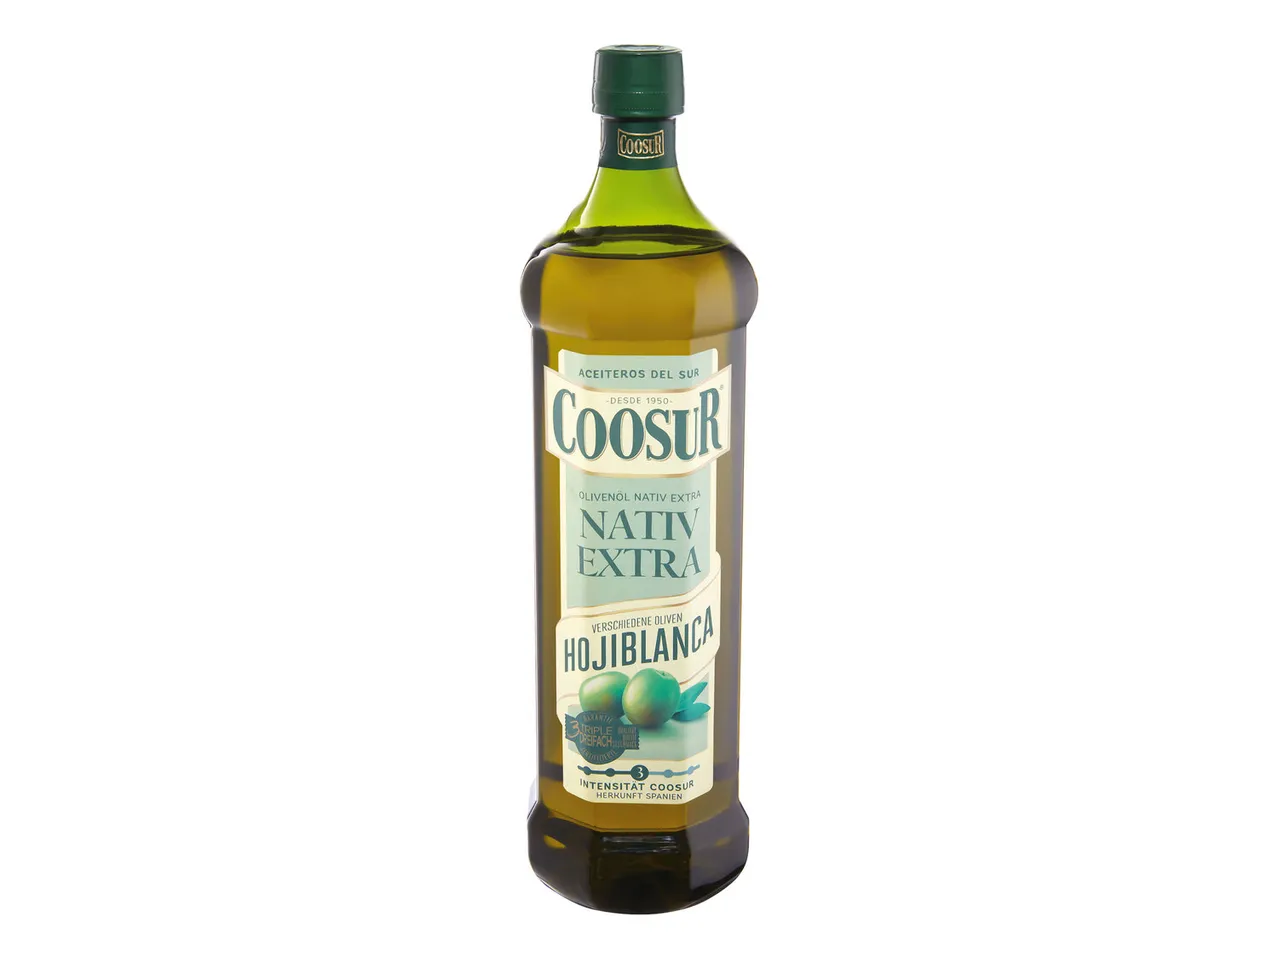 Olivenöl Coosur Hojiblanca